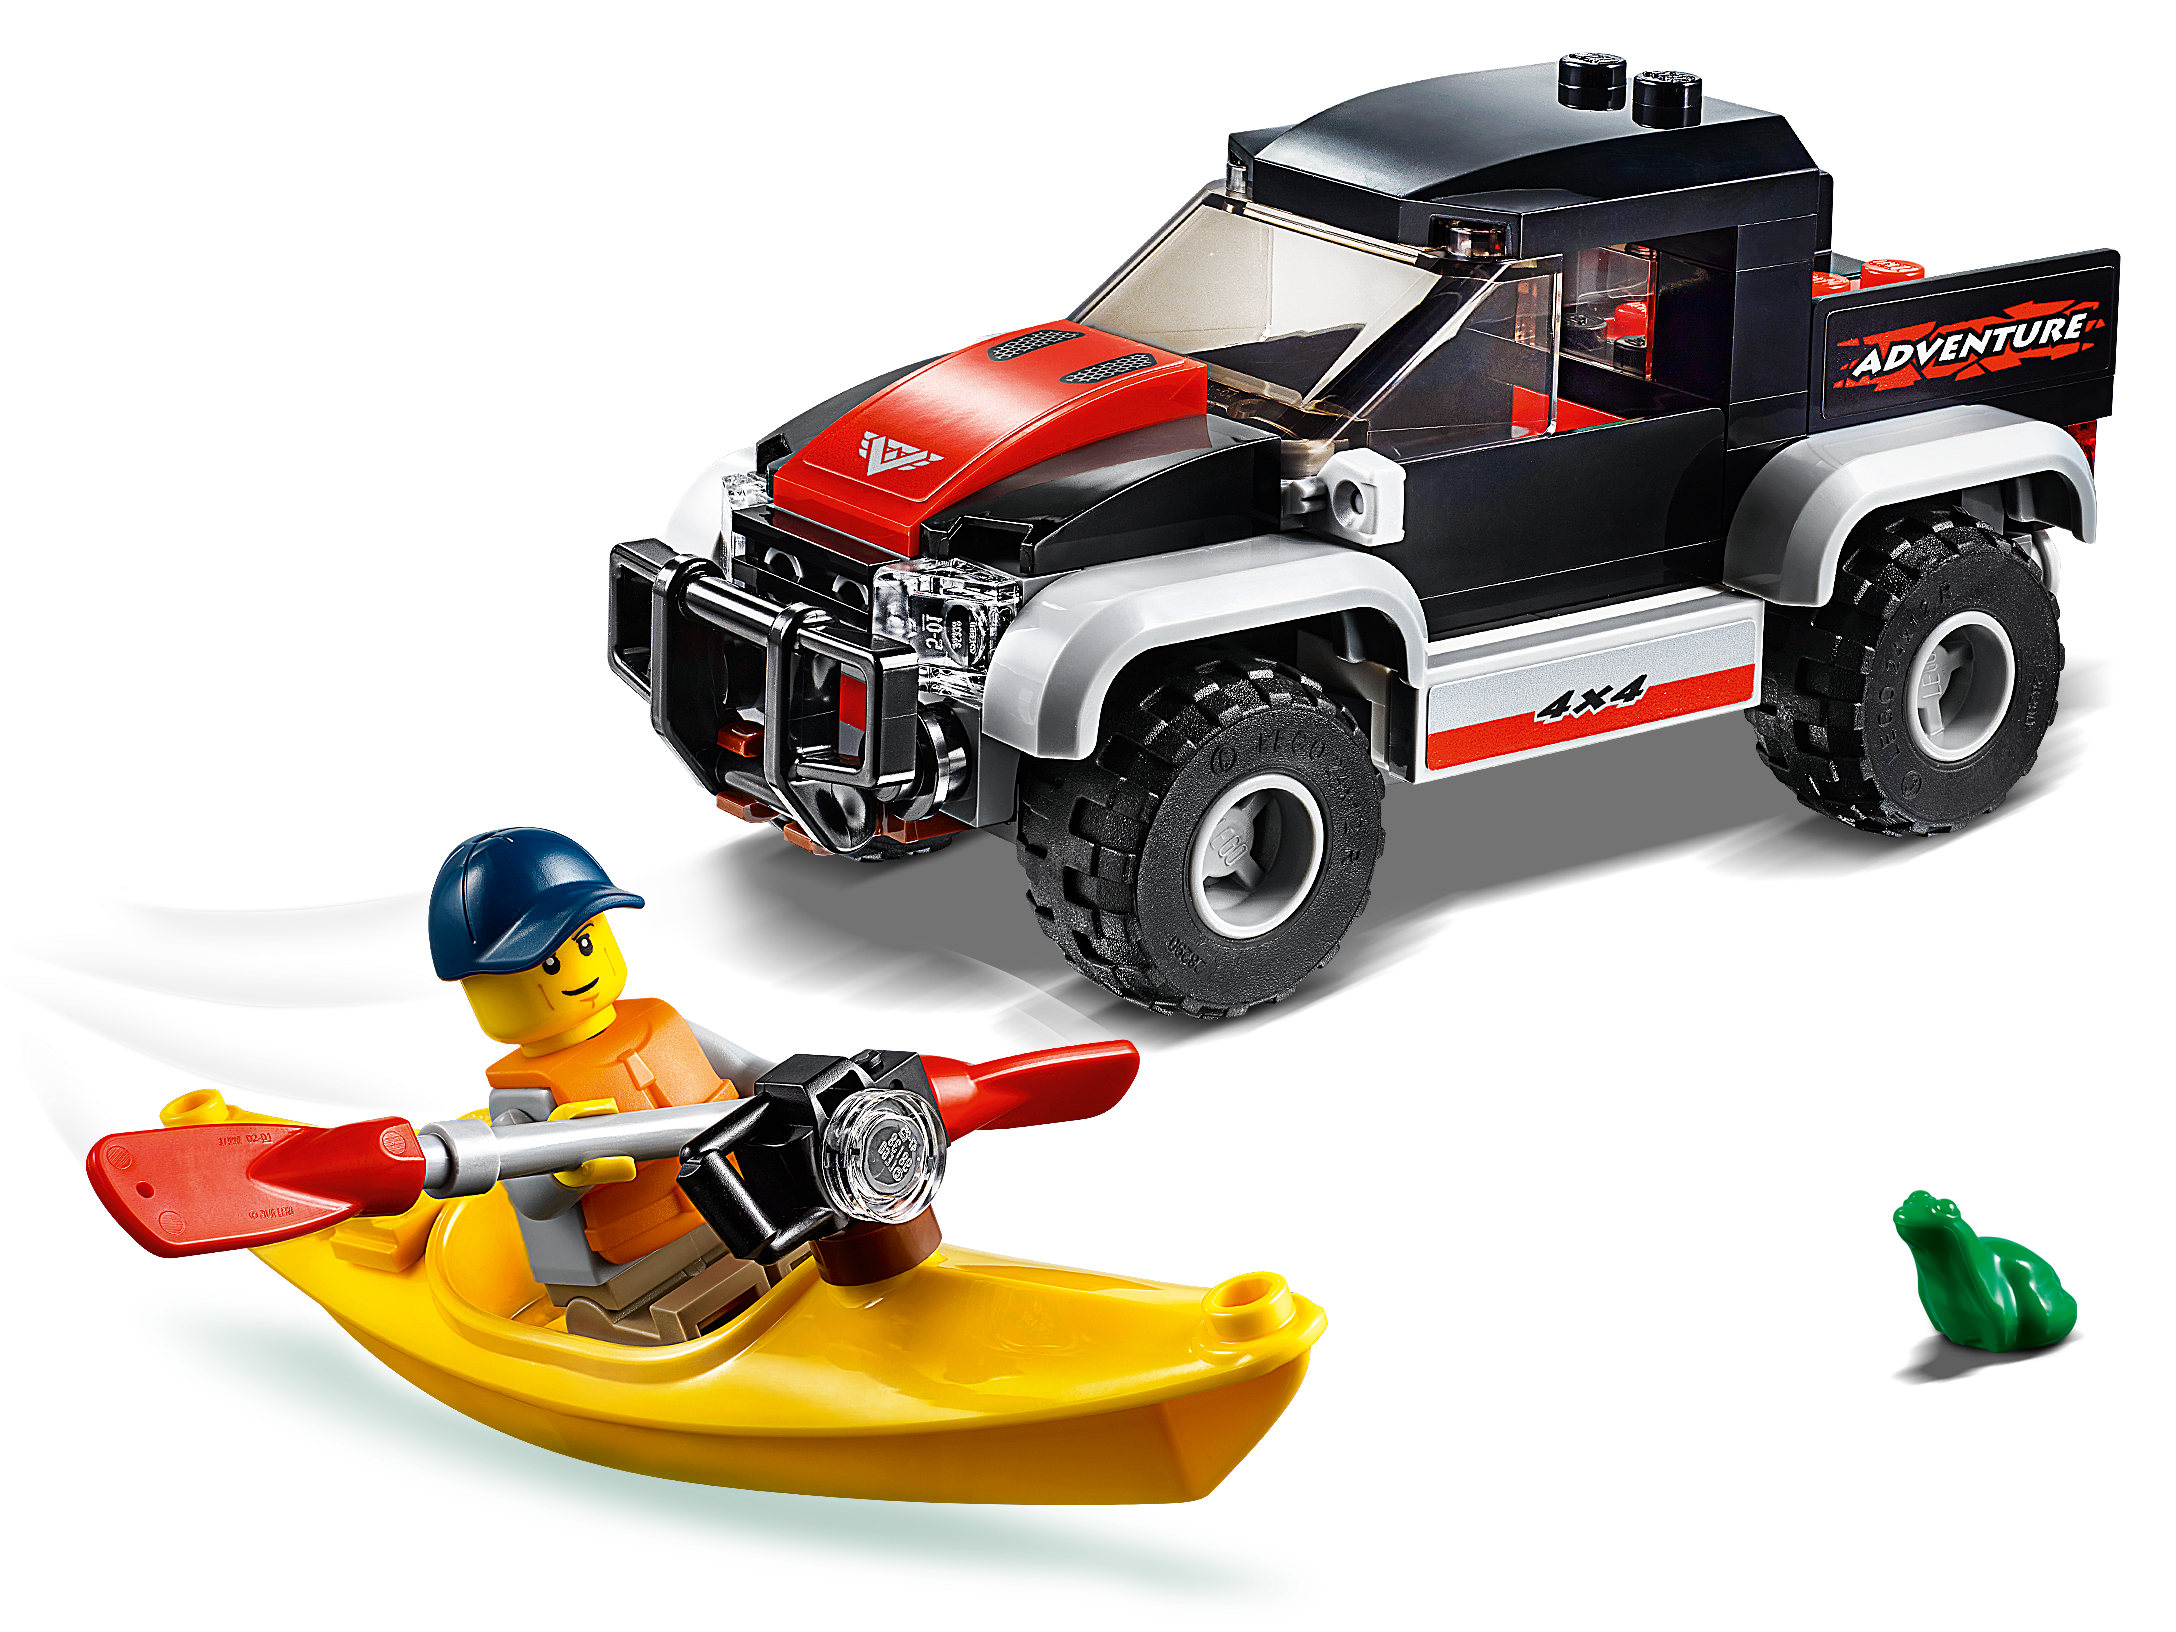 for sale online LEGO City Kayak Adventure Set 60240